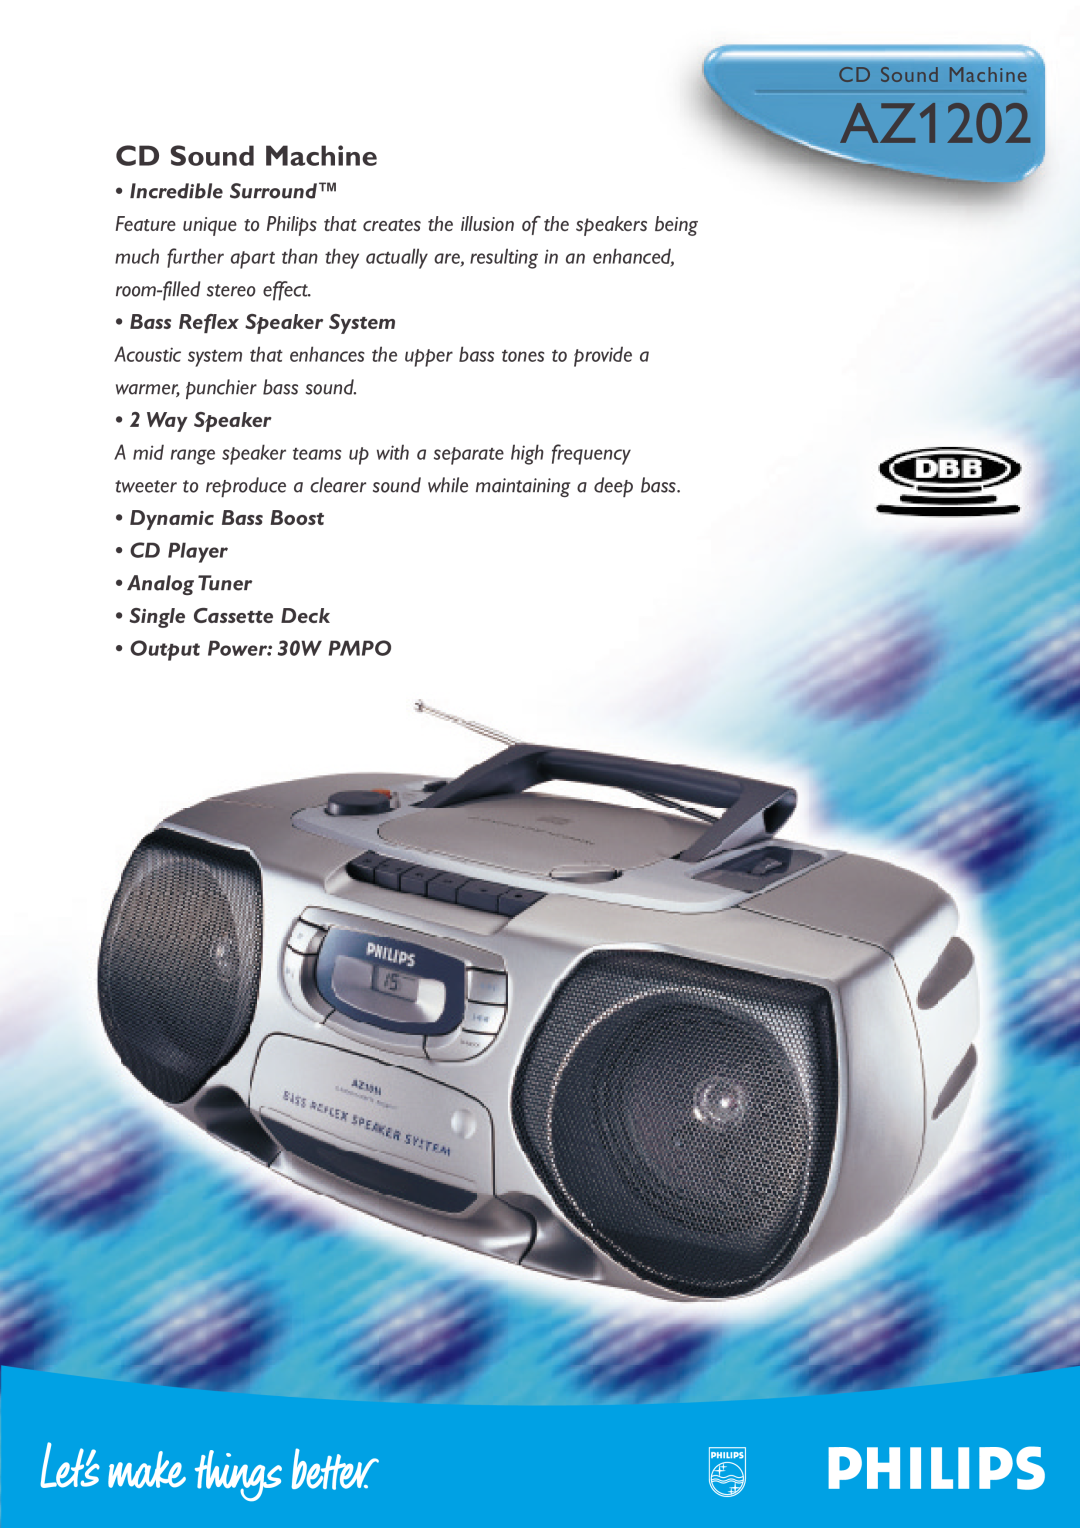 Philips AZ1202 manual CD Sound Machine, Incredible Surround, Bass Reflex Speaker System, Way Speaker 